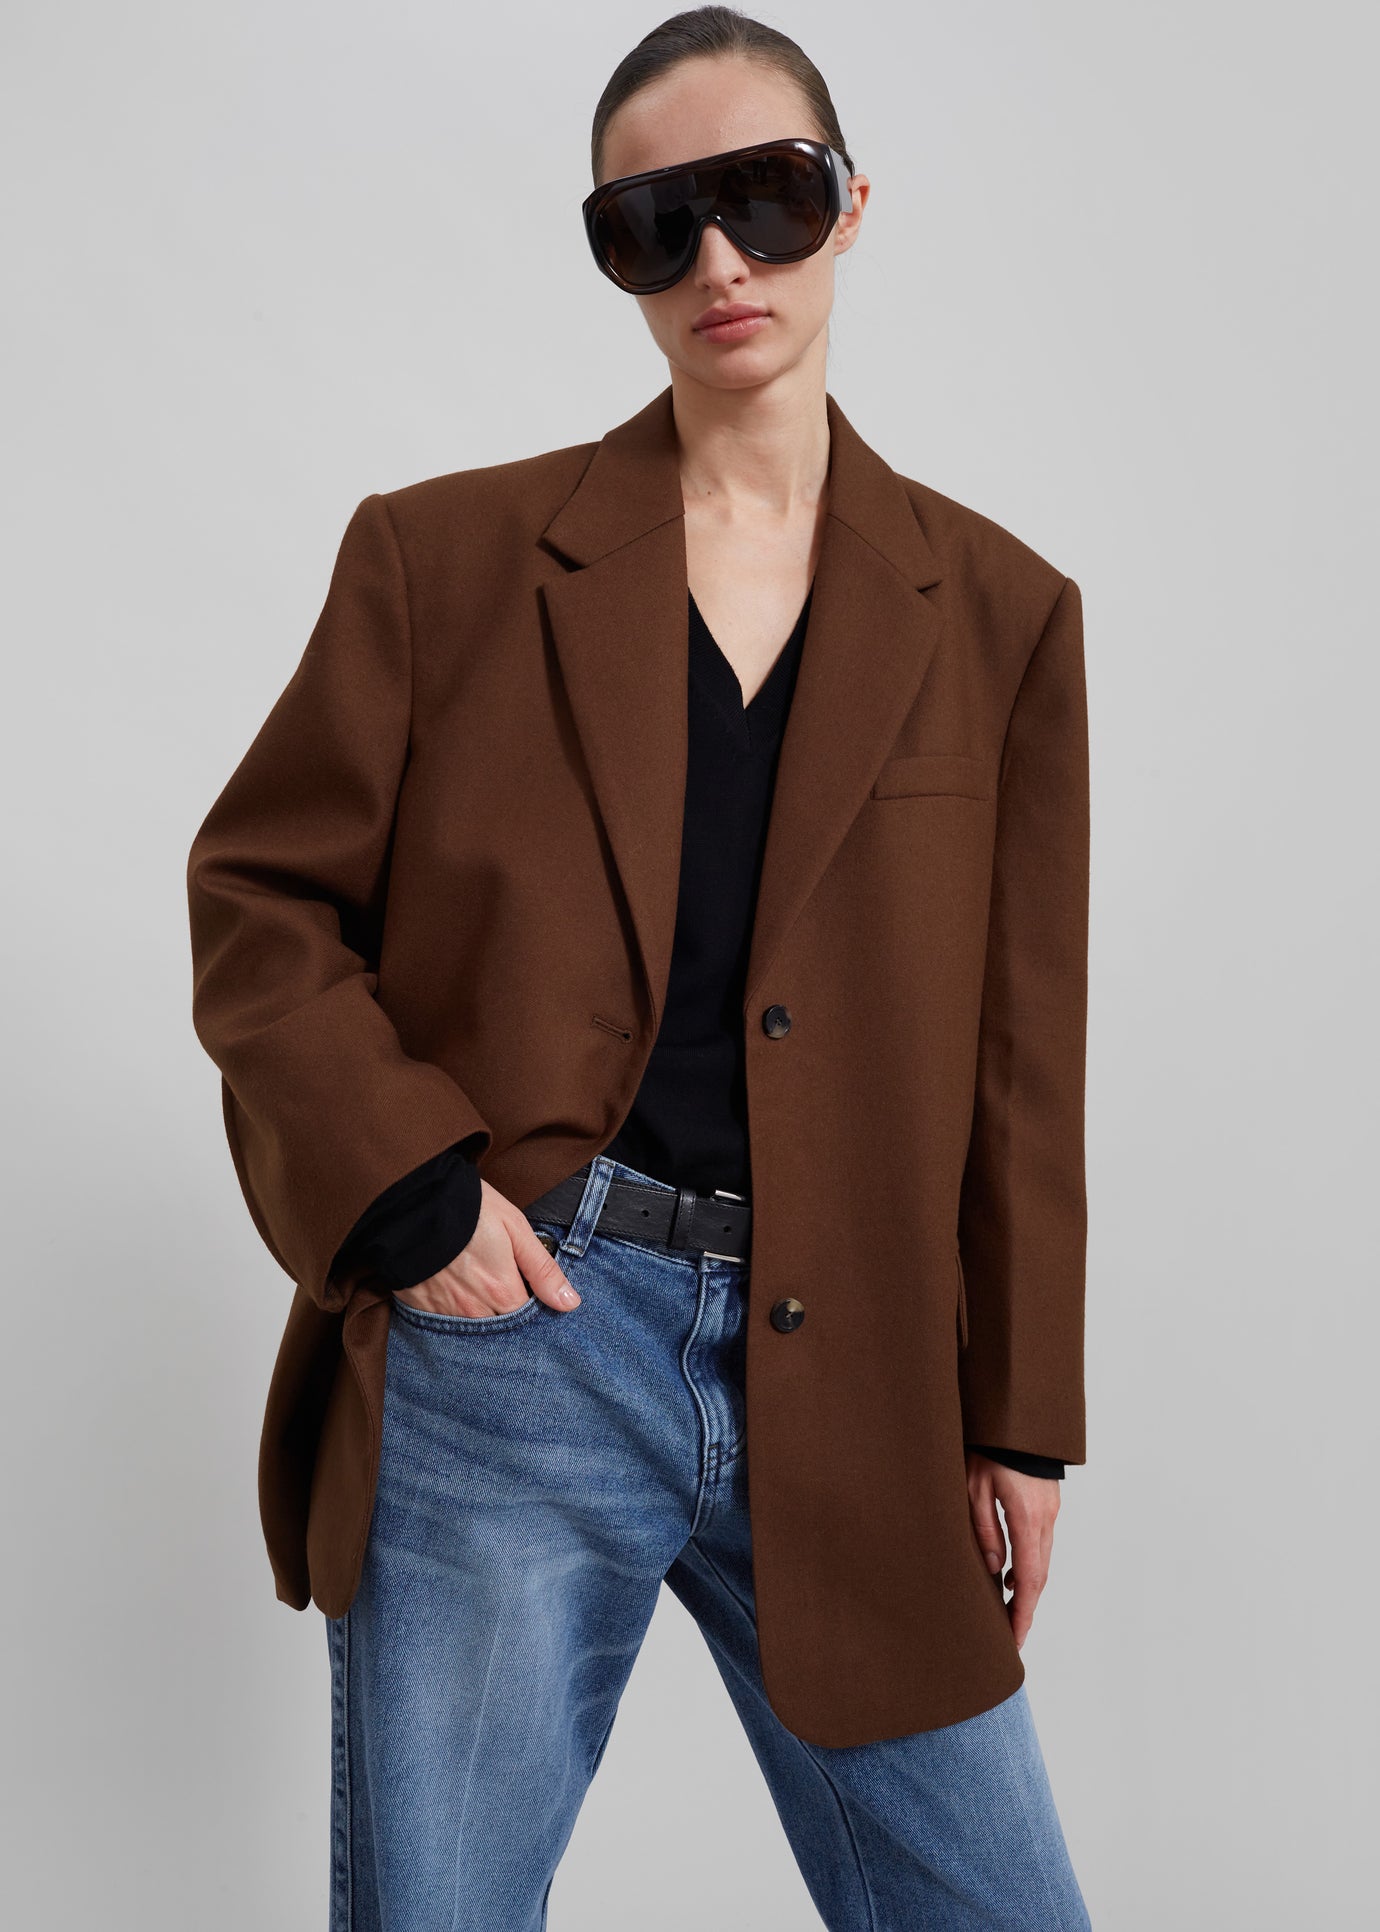 & Jackets, Shop 2 Frankie The – Blazer Women\'s – Trench Coats, Page